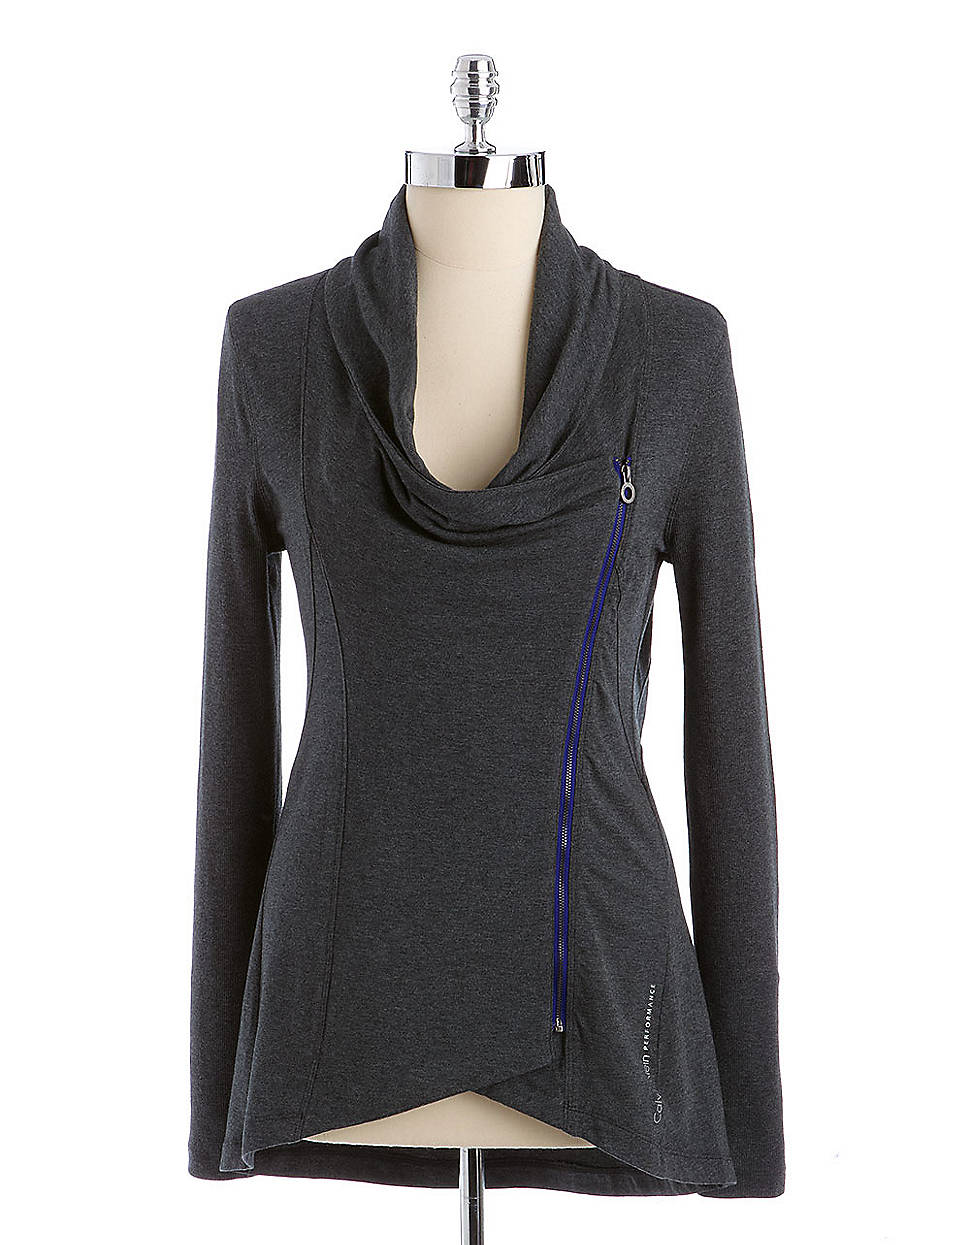 Lyst - Calvin Klein Asymmetrical Frontzip Jacket in Gray